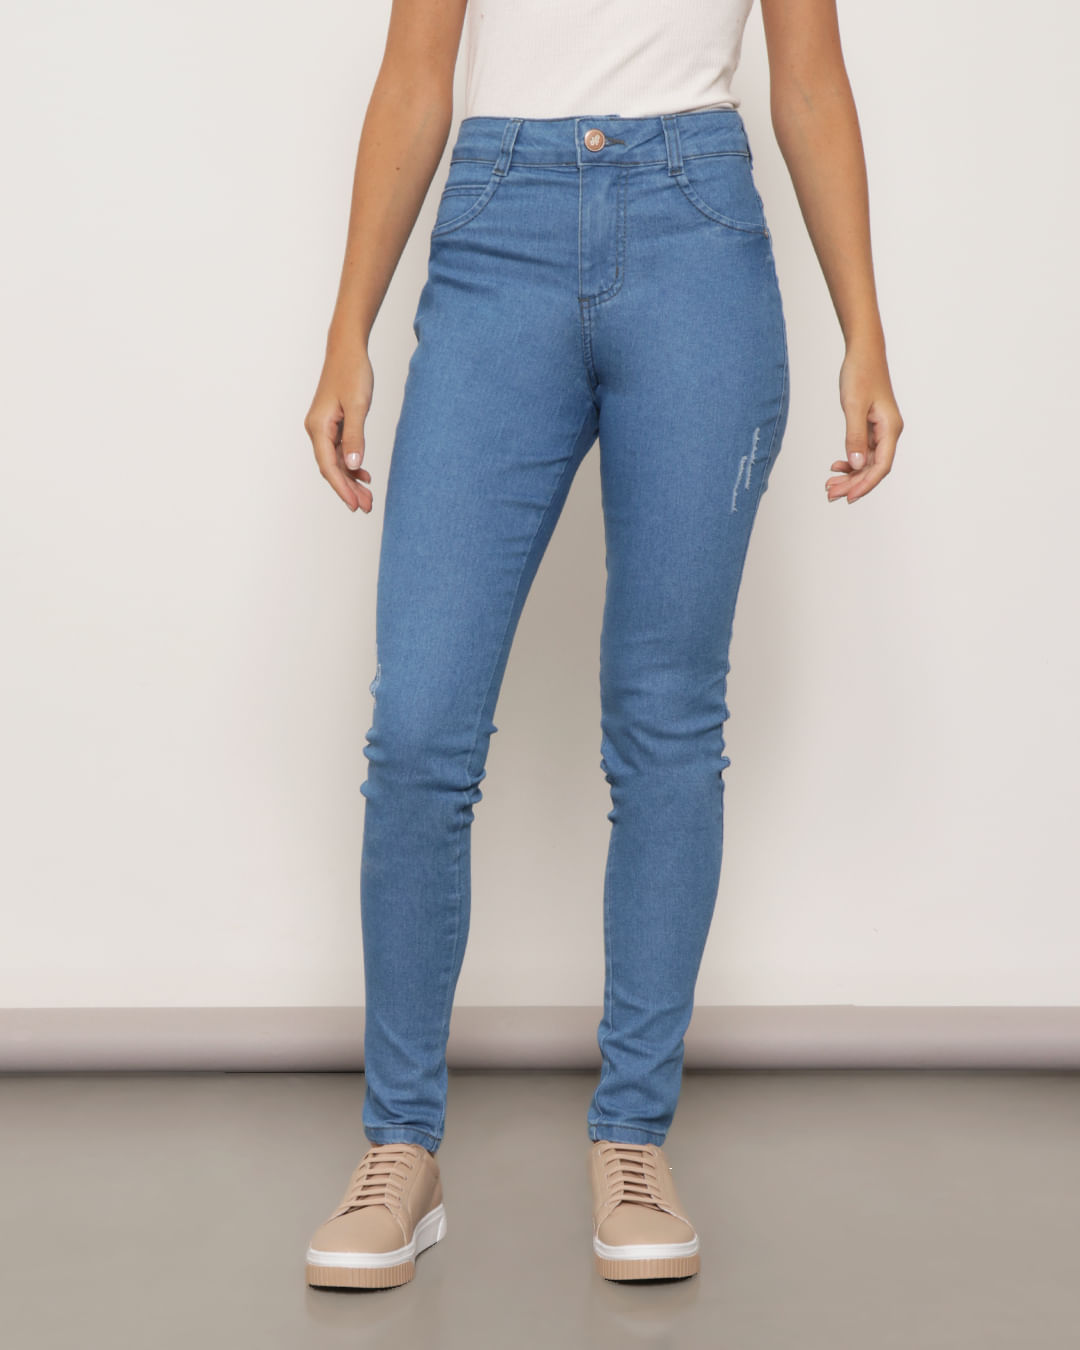 Calça Jeans Skinny Midi Detalhe na Barra Plus Size Feminina Biotipo -  Marshoes